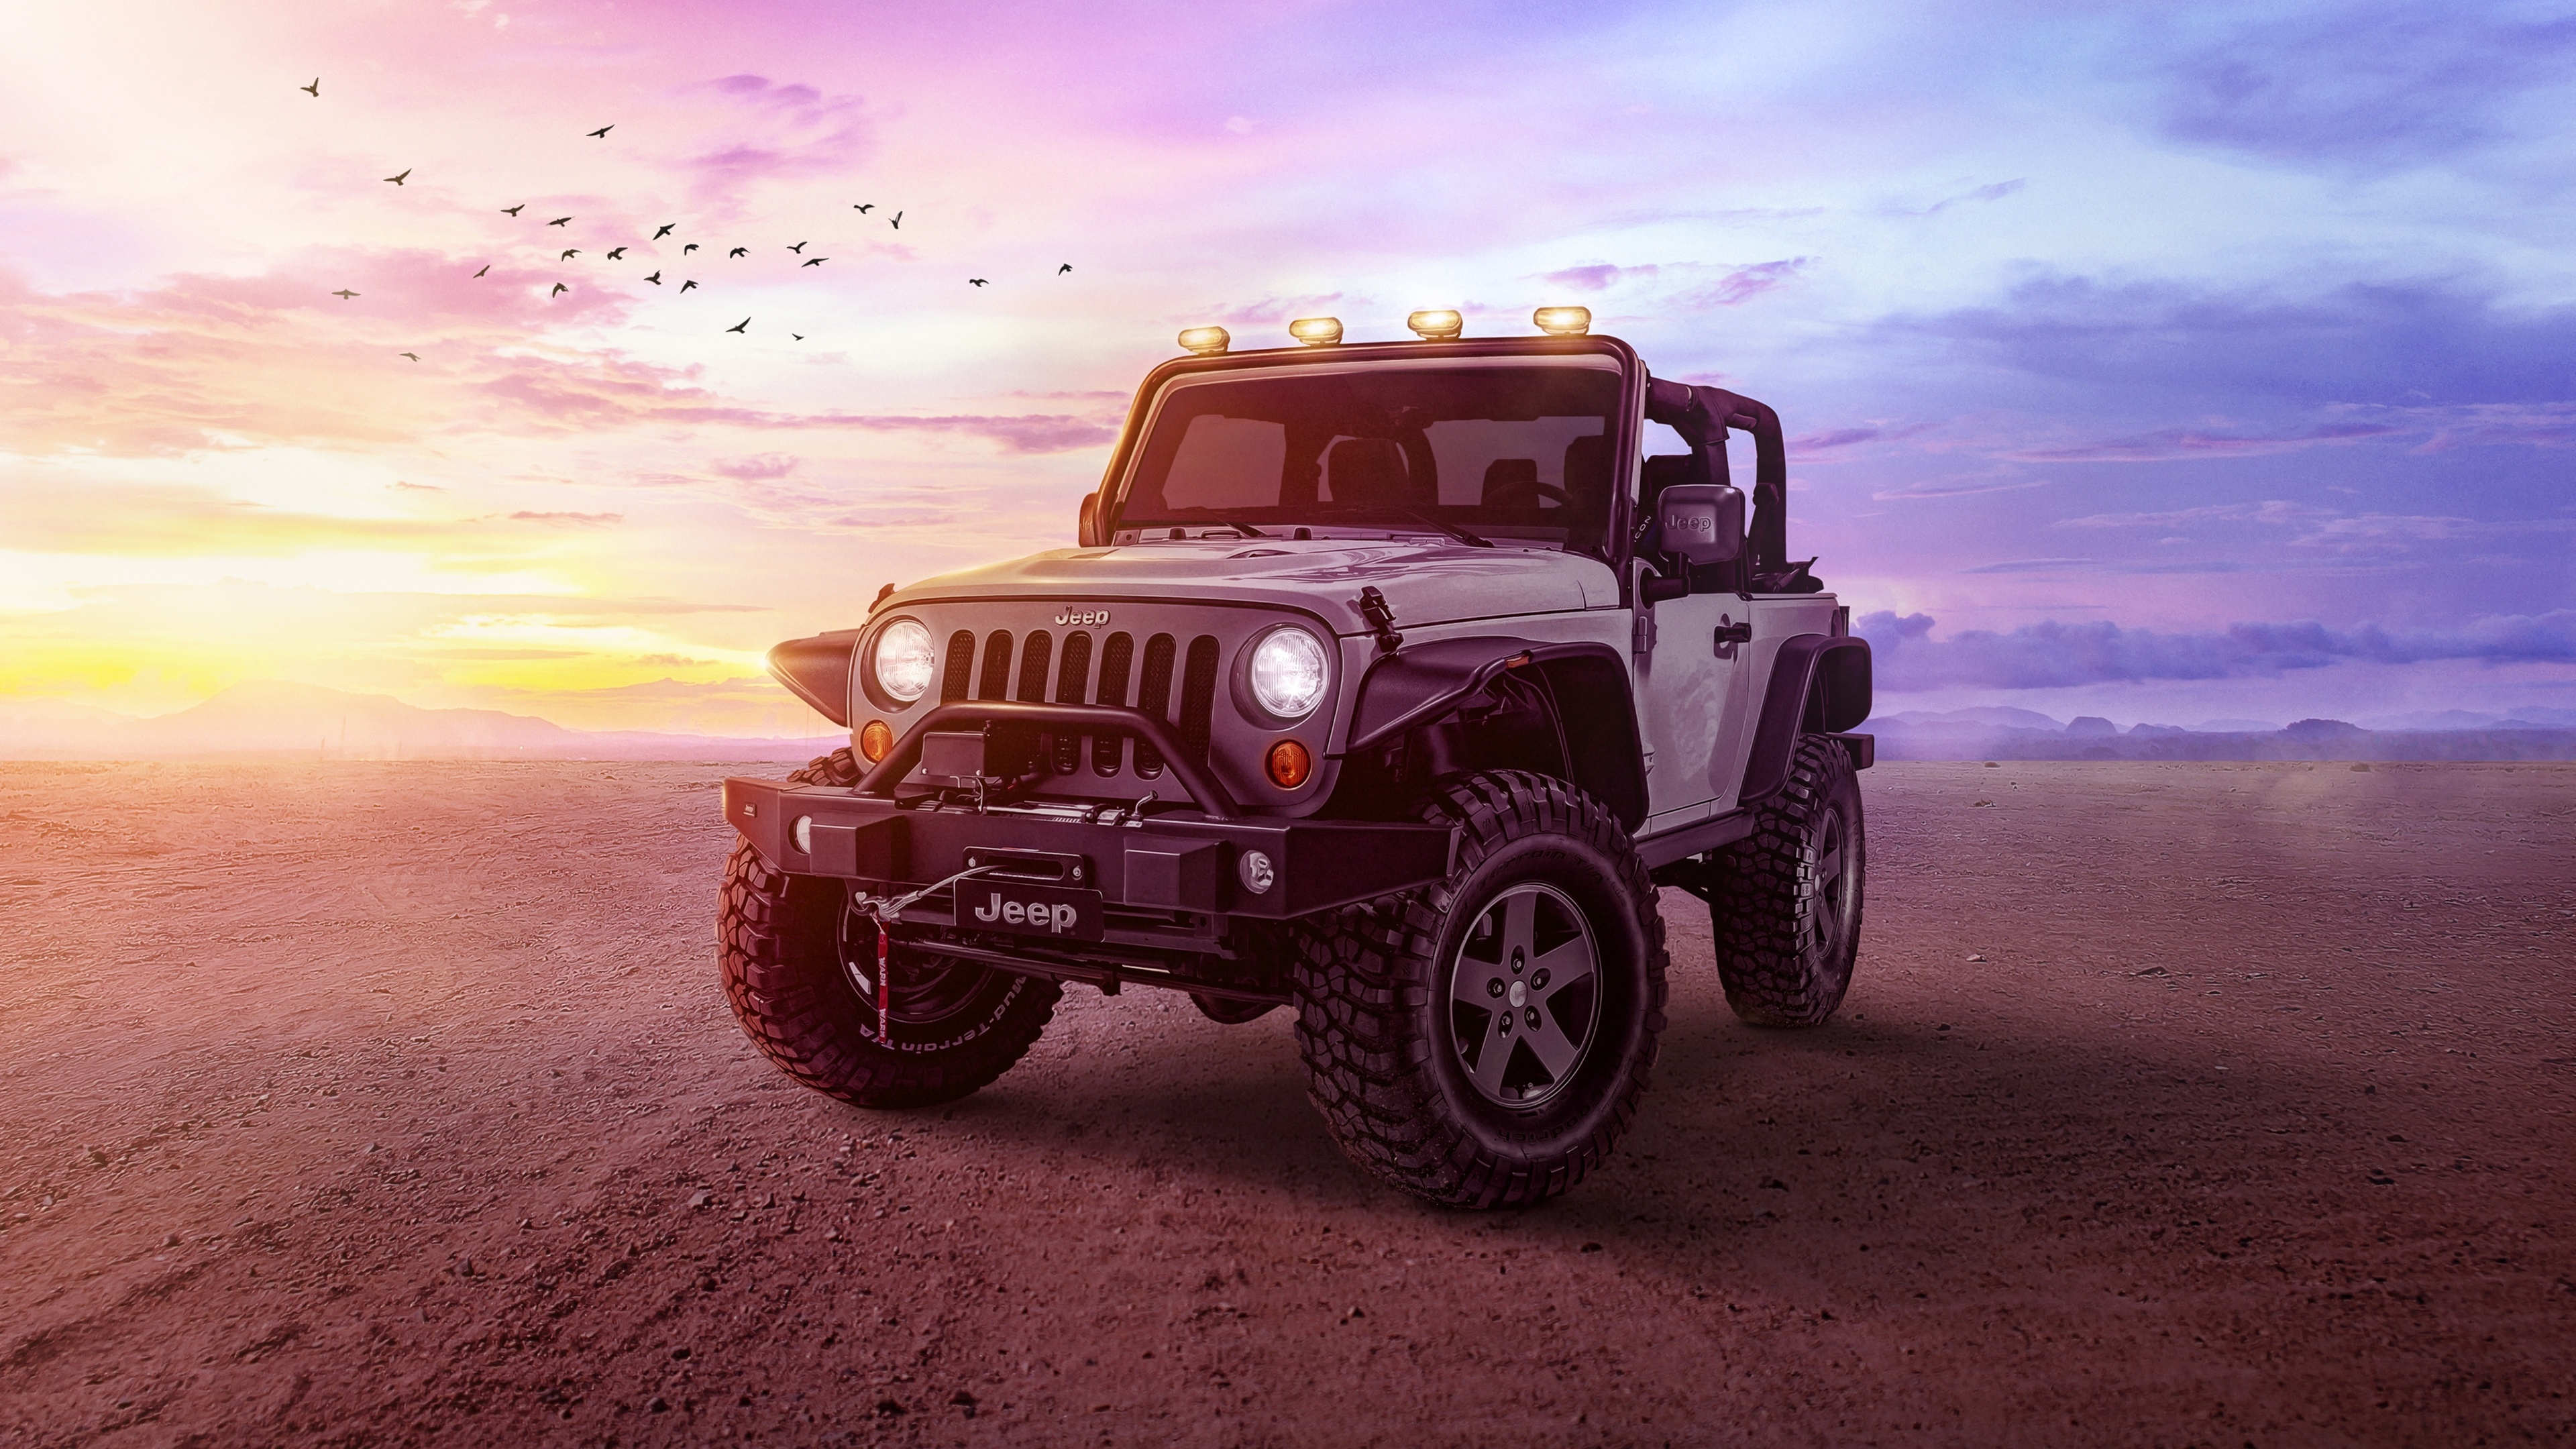 Off-road Driving: Jeep Wrangler 4x4, Desert racing, Racing on a rough desert terrain. 3840x2160 4K Background.